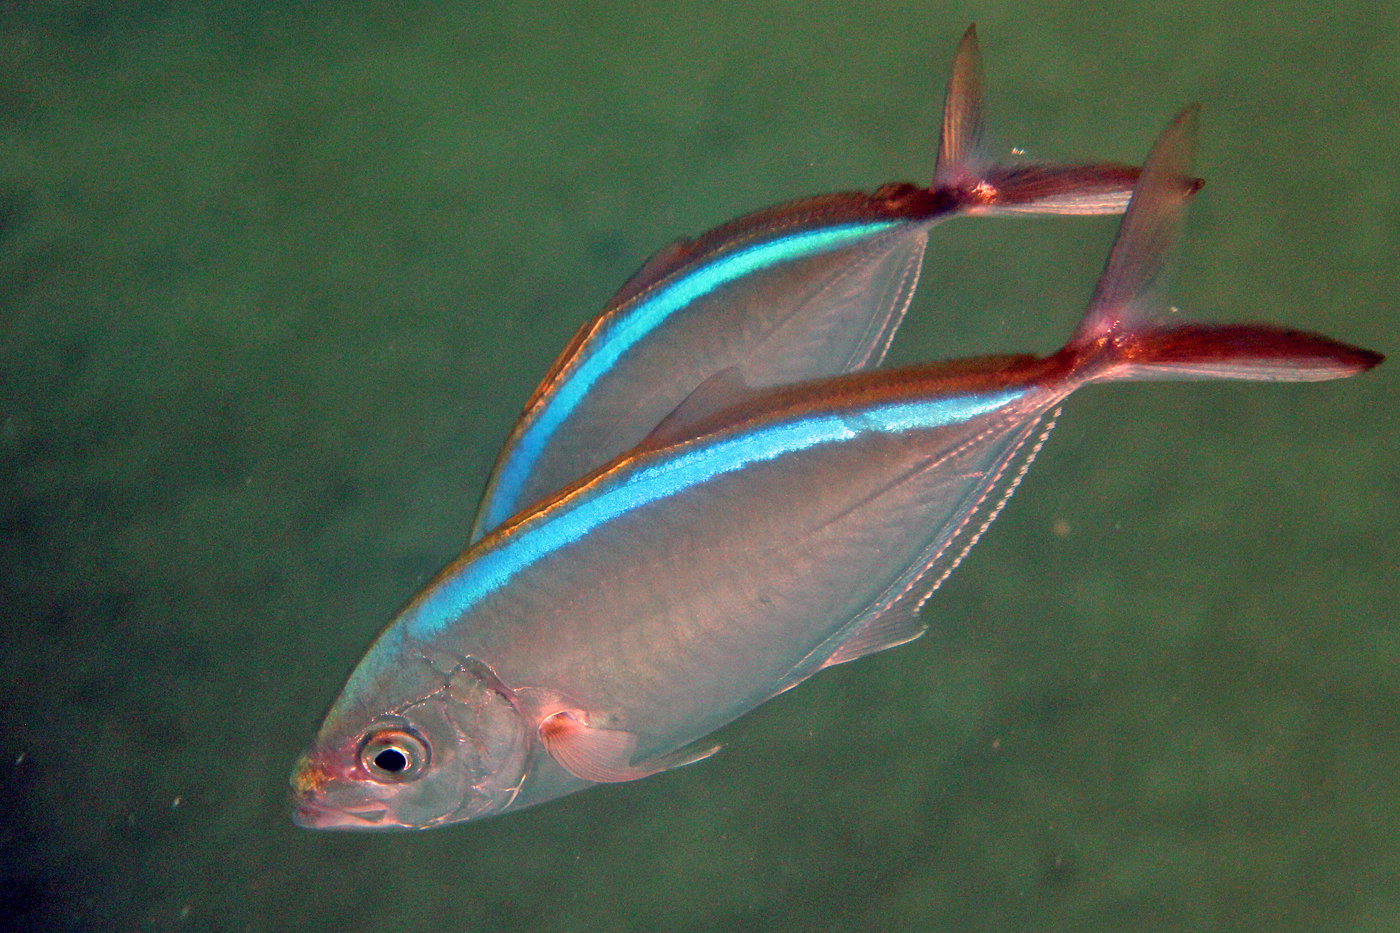 Bar Jack - Caranx ruber - Caribbean Fish Identification USVI